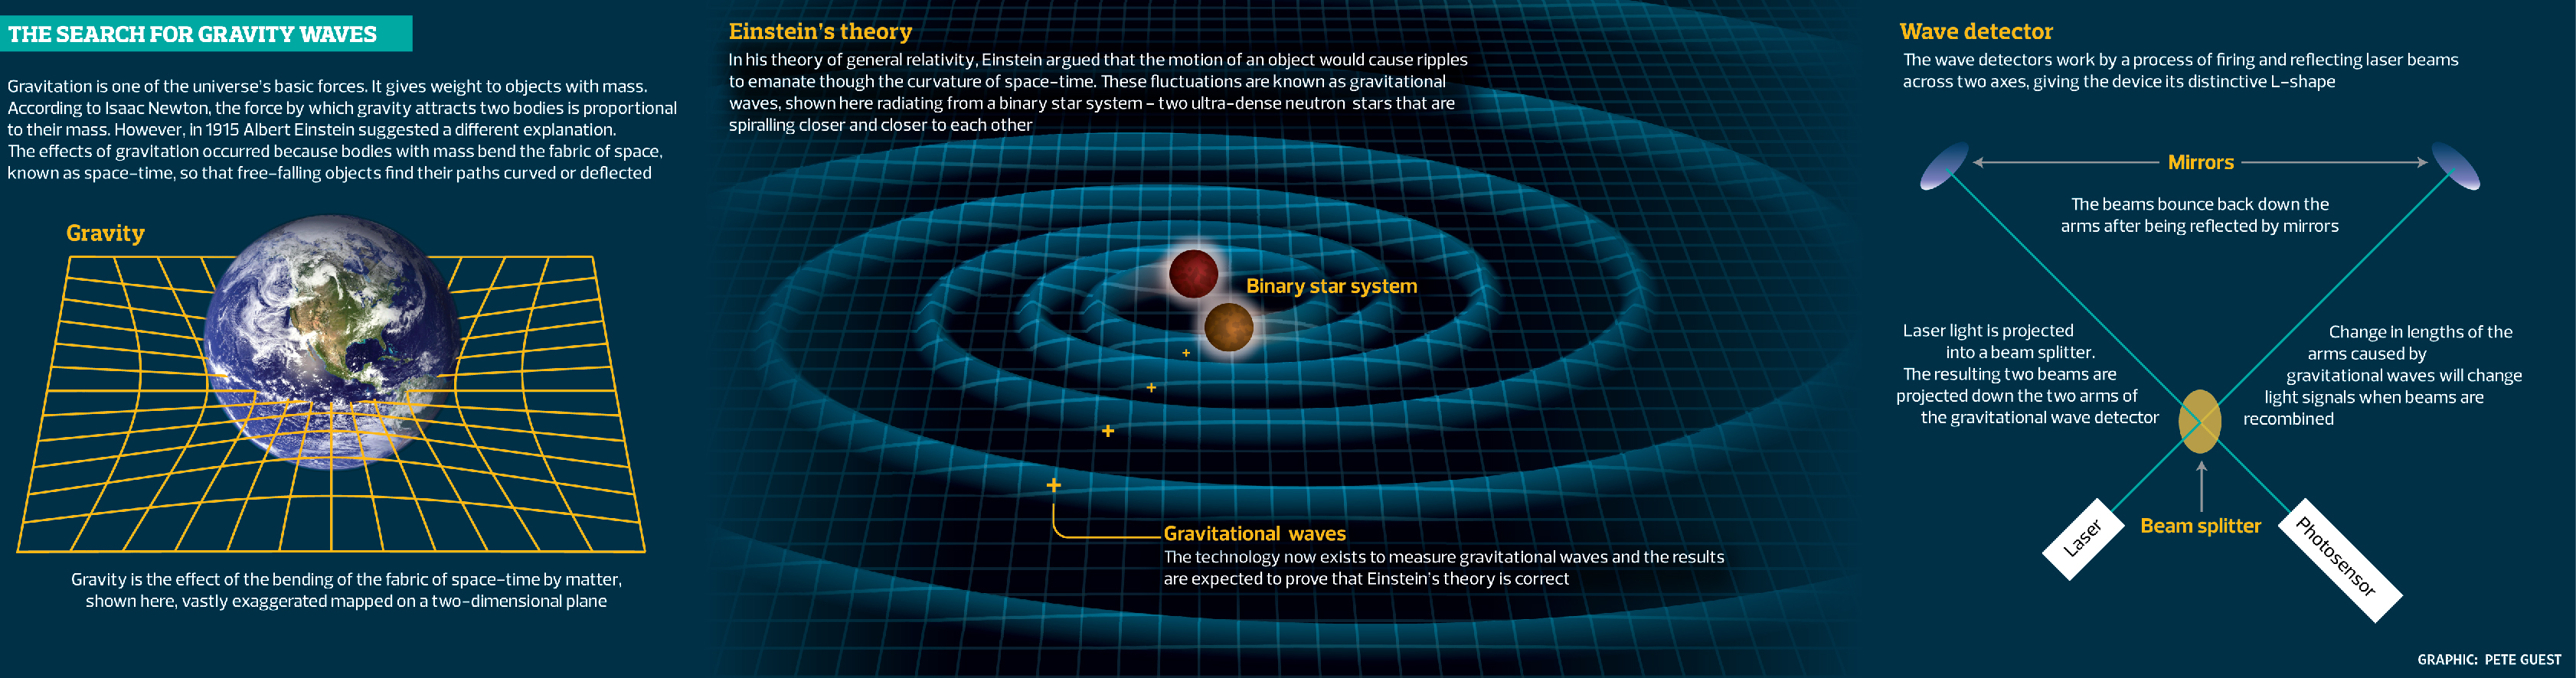 Gravitational waves explained. image: the guardian